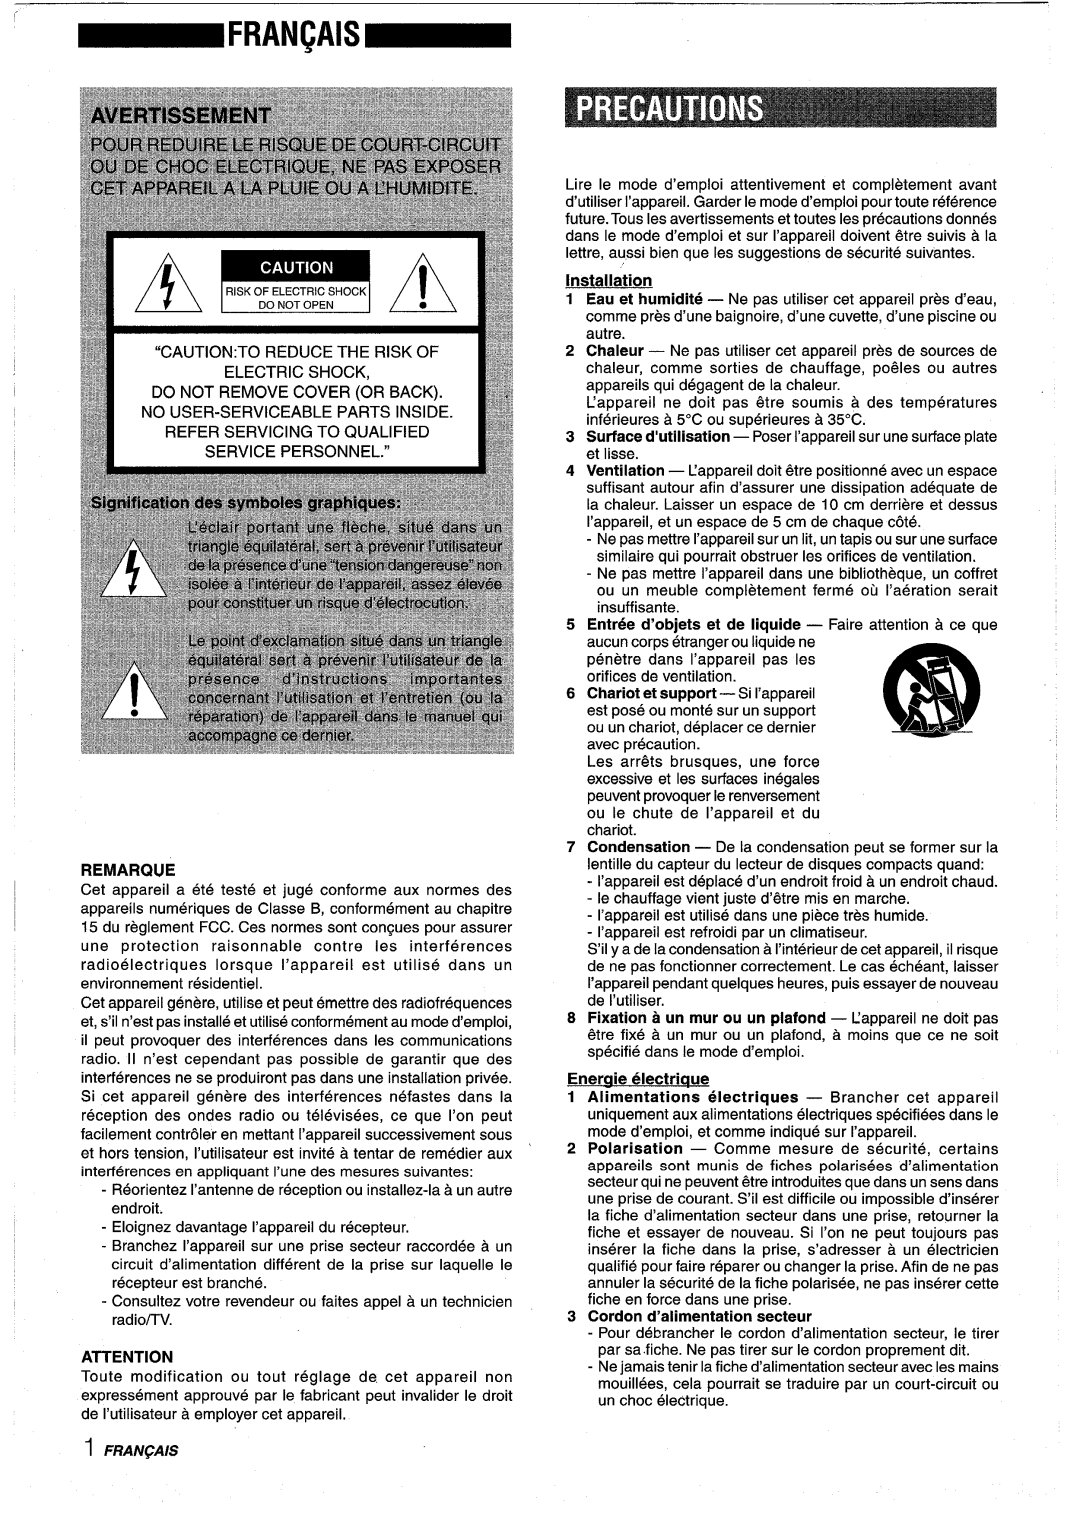 Sony NSX-A959 manual Installation, Remarque, Eneraie electriaue, Cordon d’alimentation secteur 